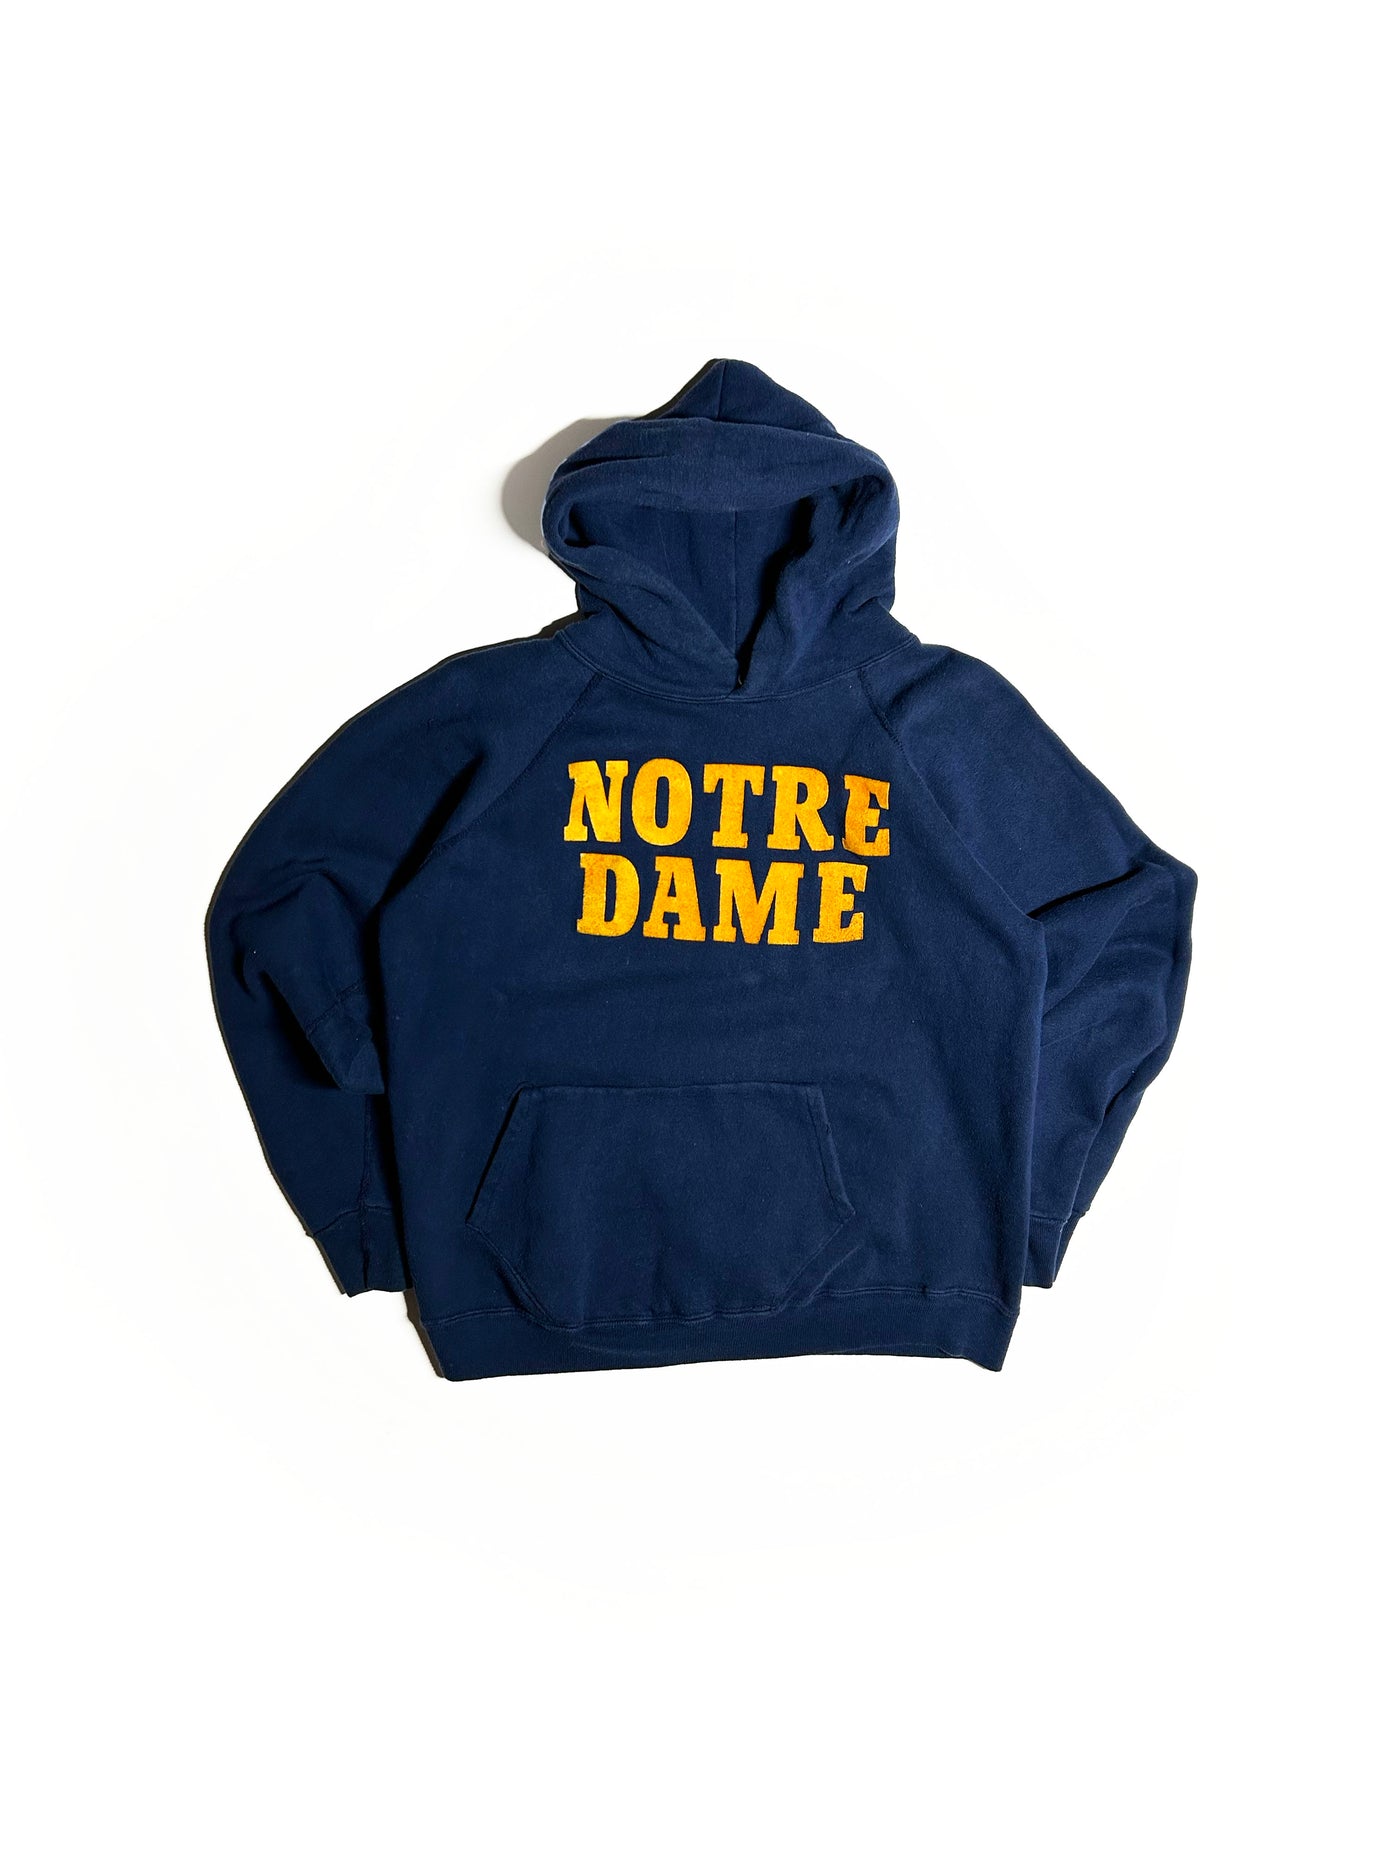 Vintage 1970s Notre Dame Champion Felt Hoodie